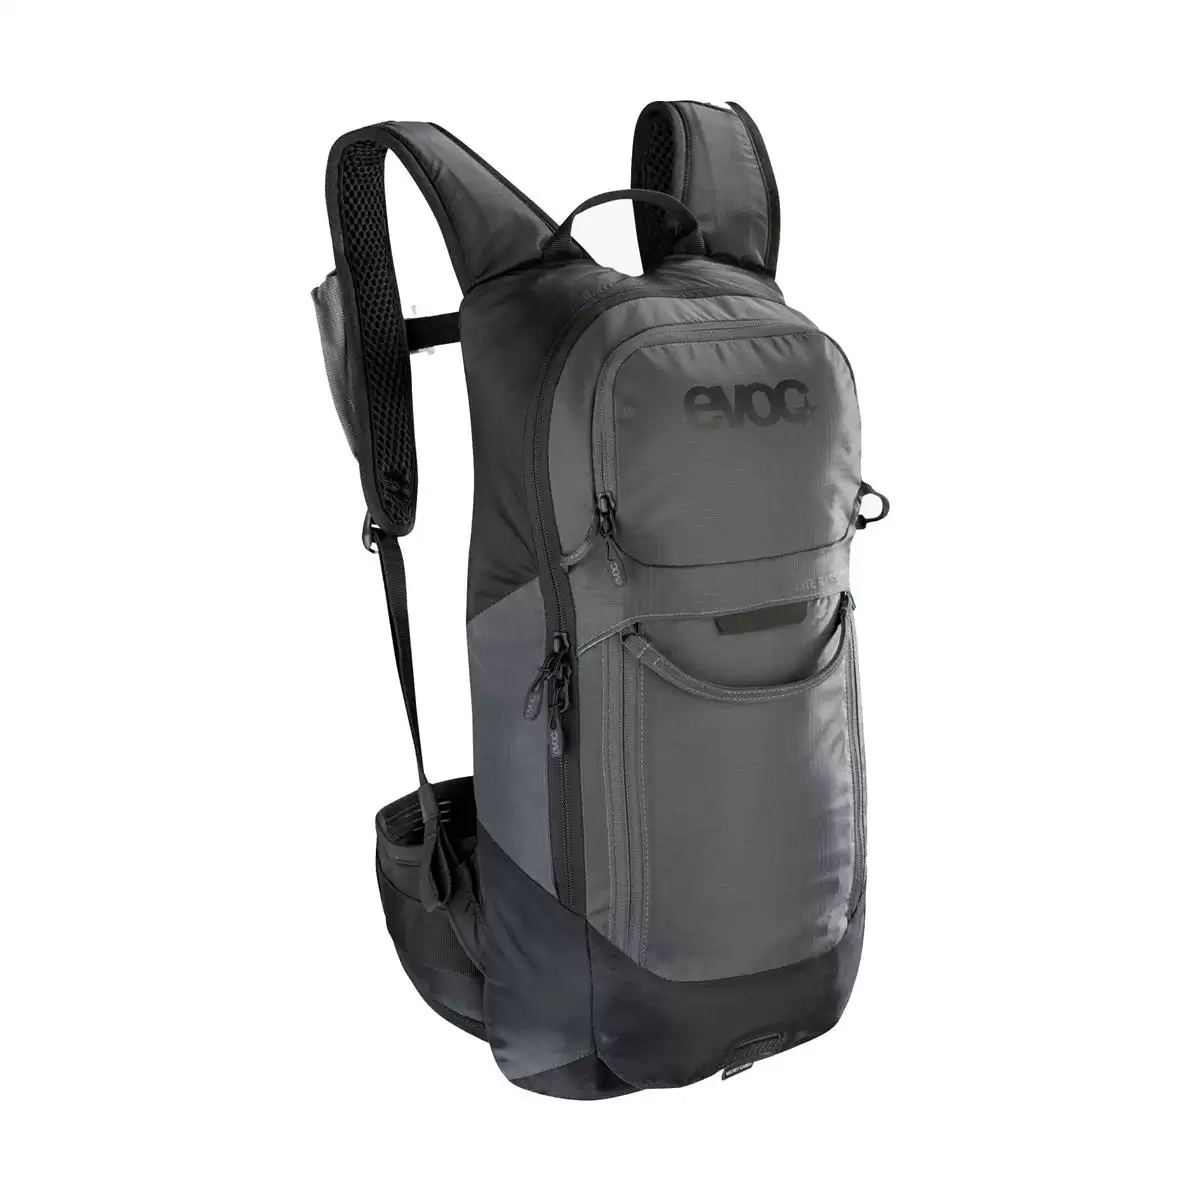 FR Lite Race 10 Backpack With Back Protector 10L Grey/Black Size S - image